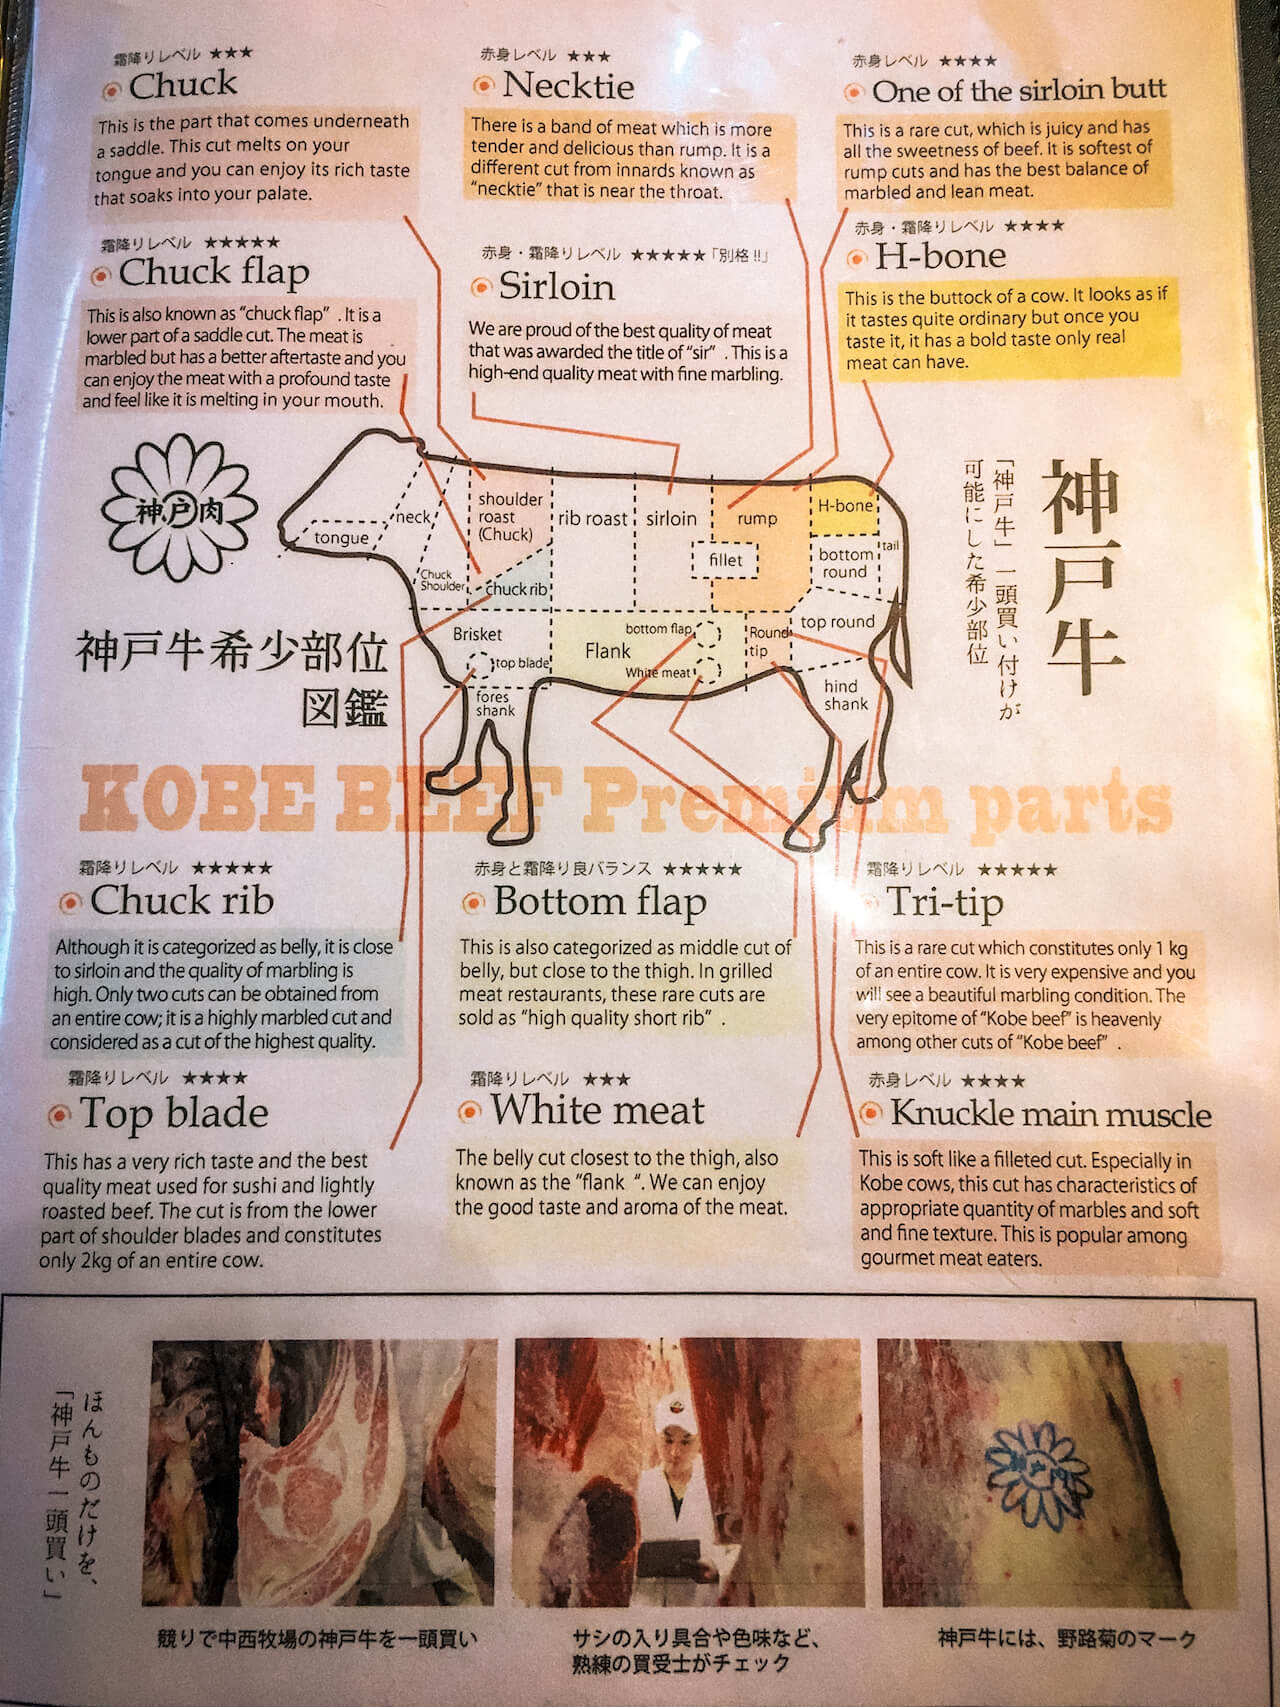 parts of kobe beef